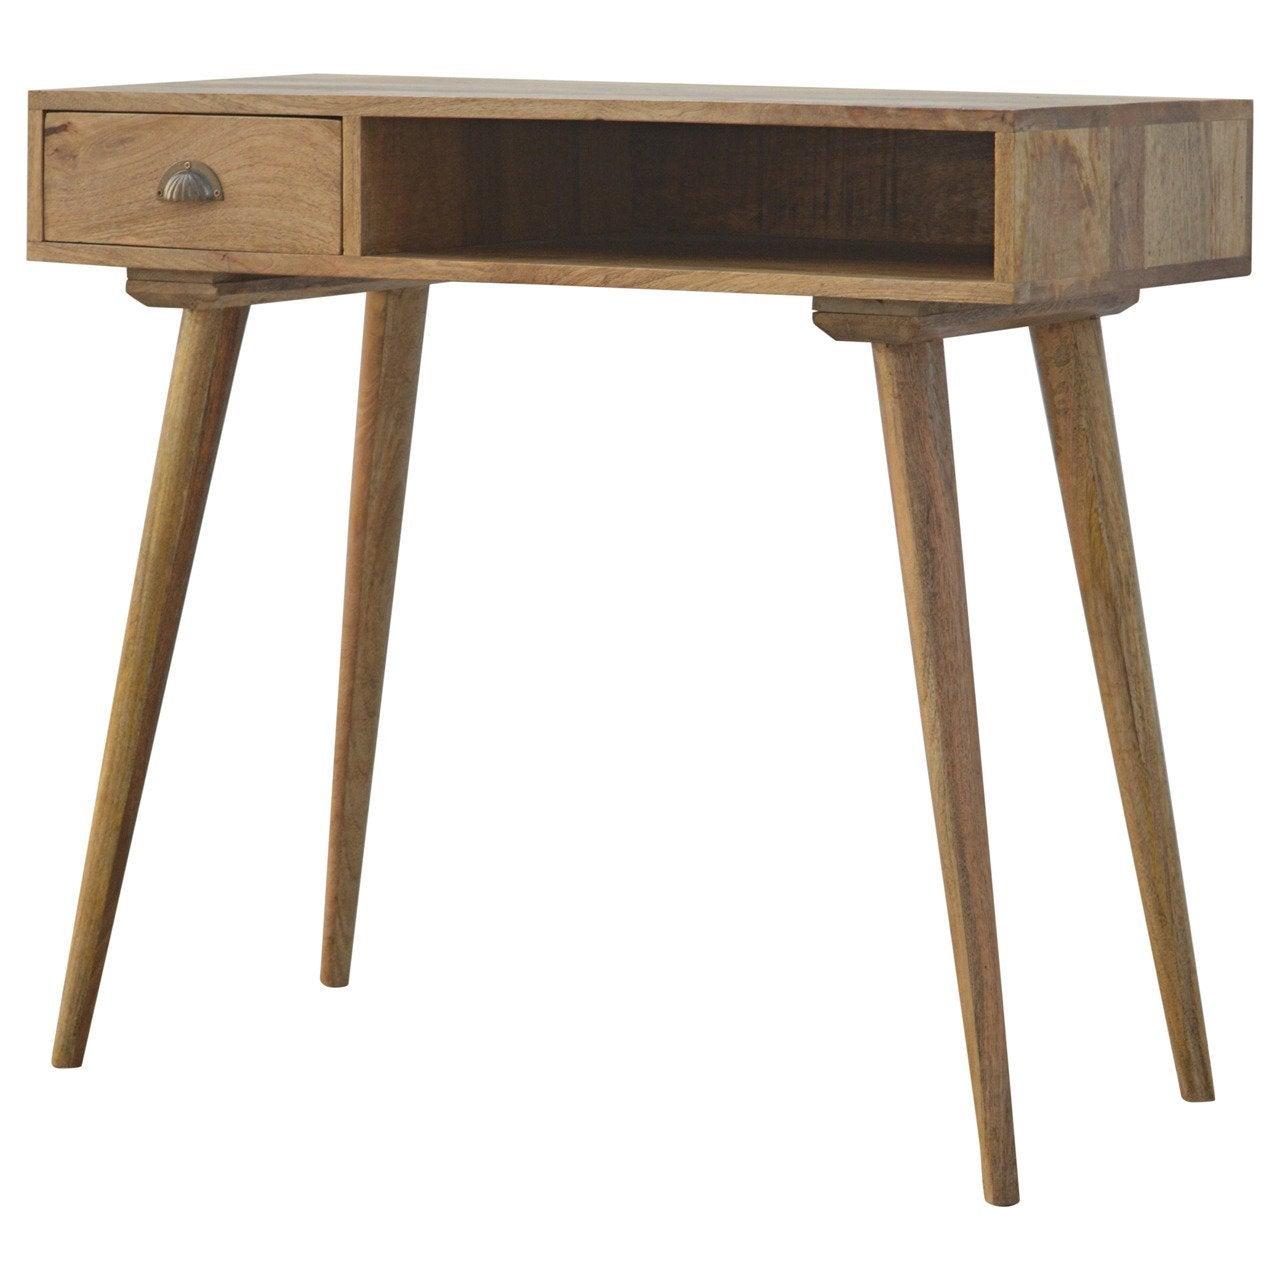 Solid wood writing desk with open slot - crimblefest furniture - image 5